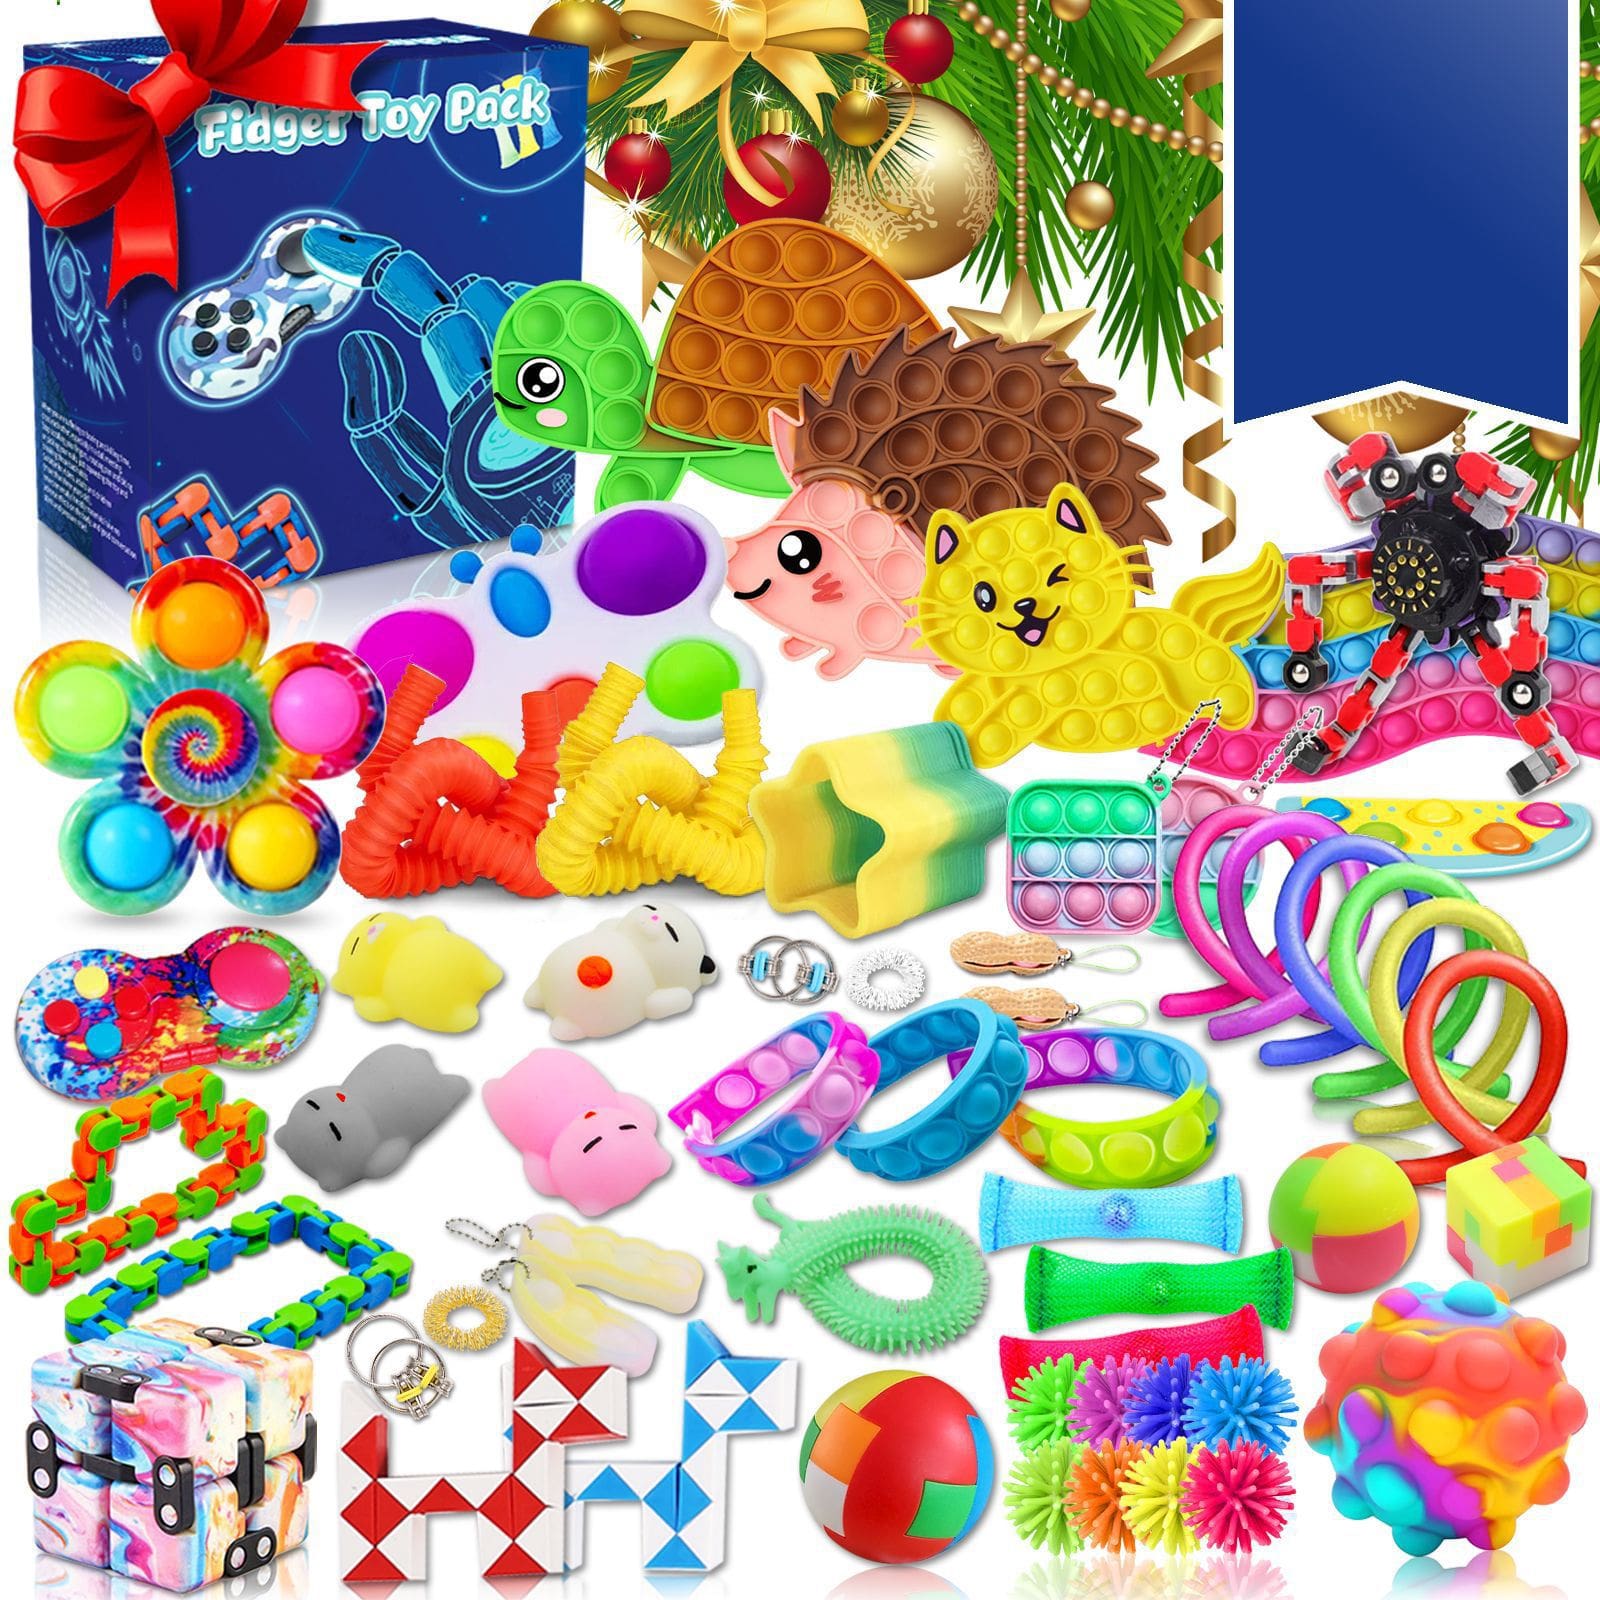 Anti Stress Fidget Toys Pack for Gift